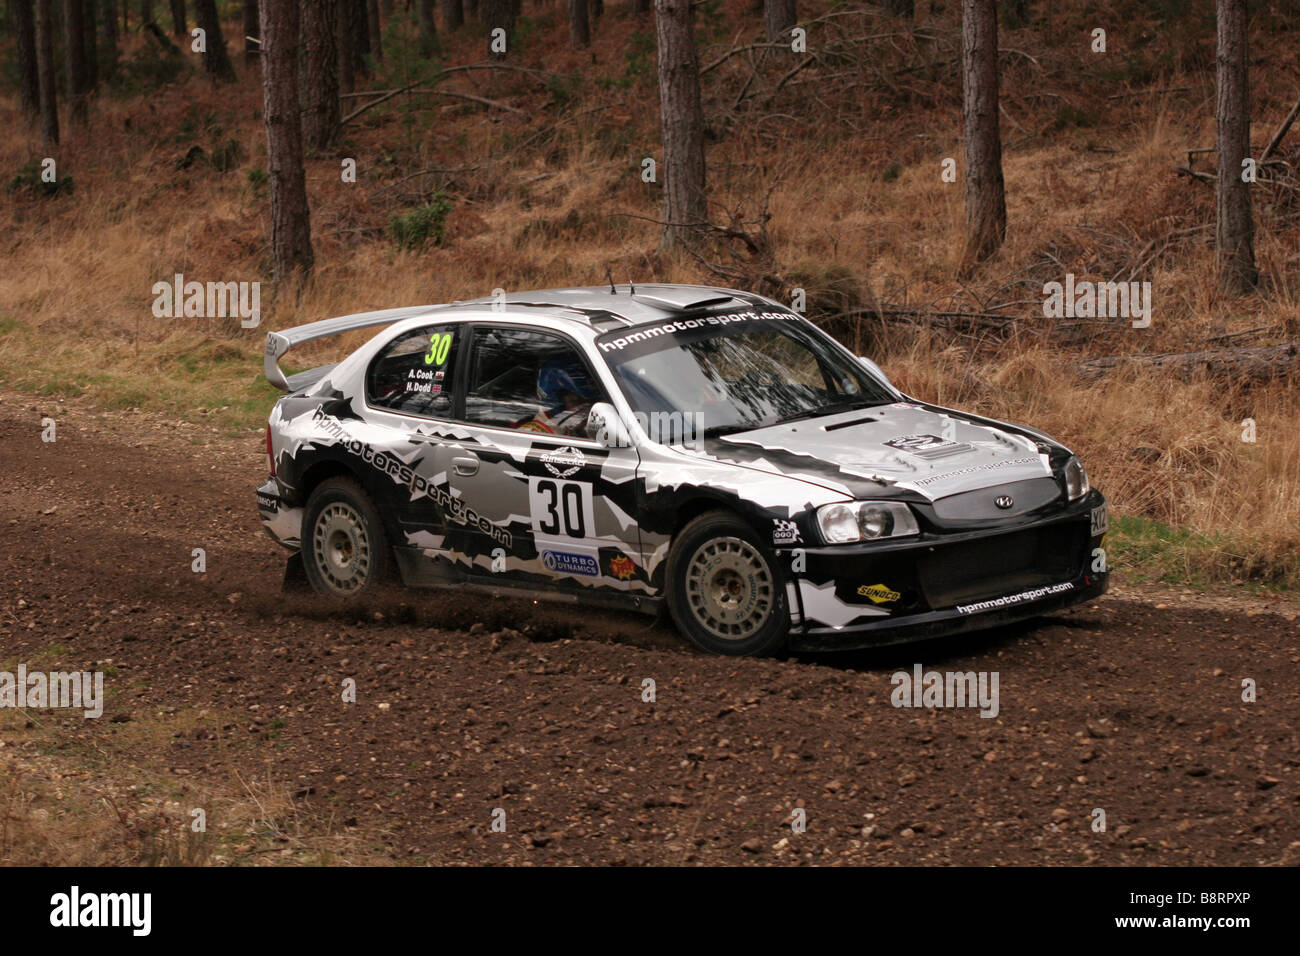 Photo d'action de voiture de Rallye Rallye proforming à Sunseeker 2009 Banque D'Images